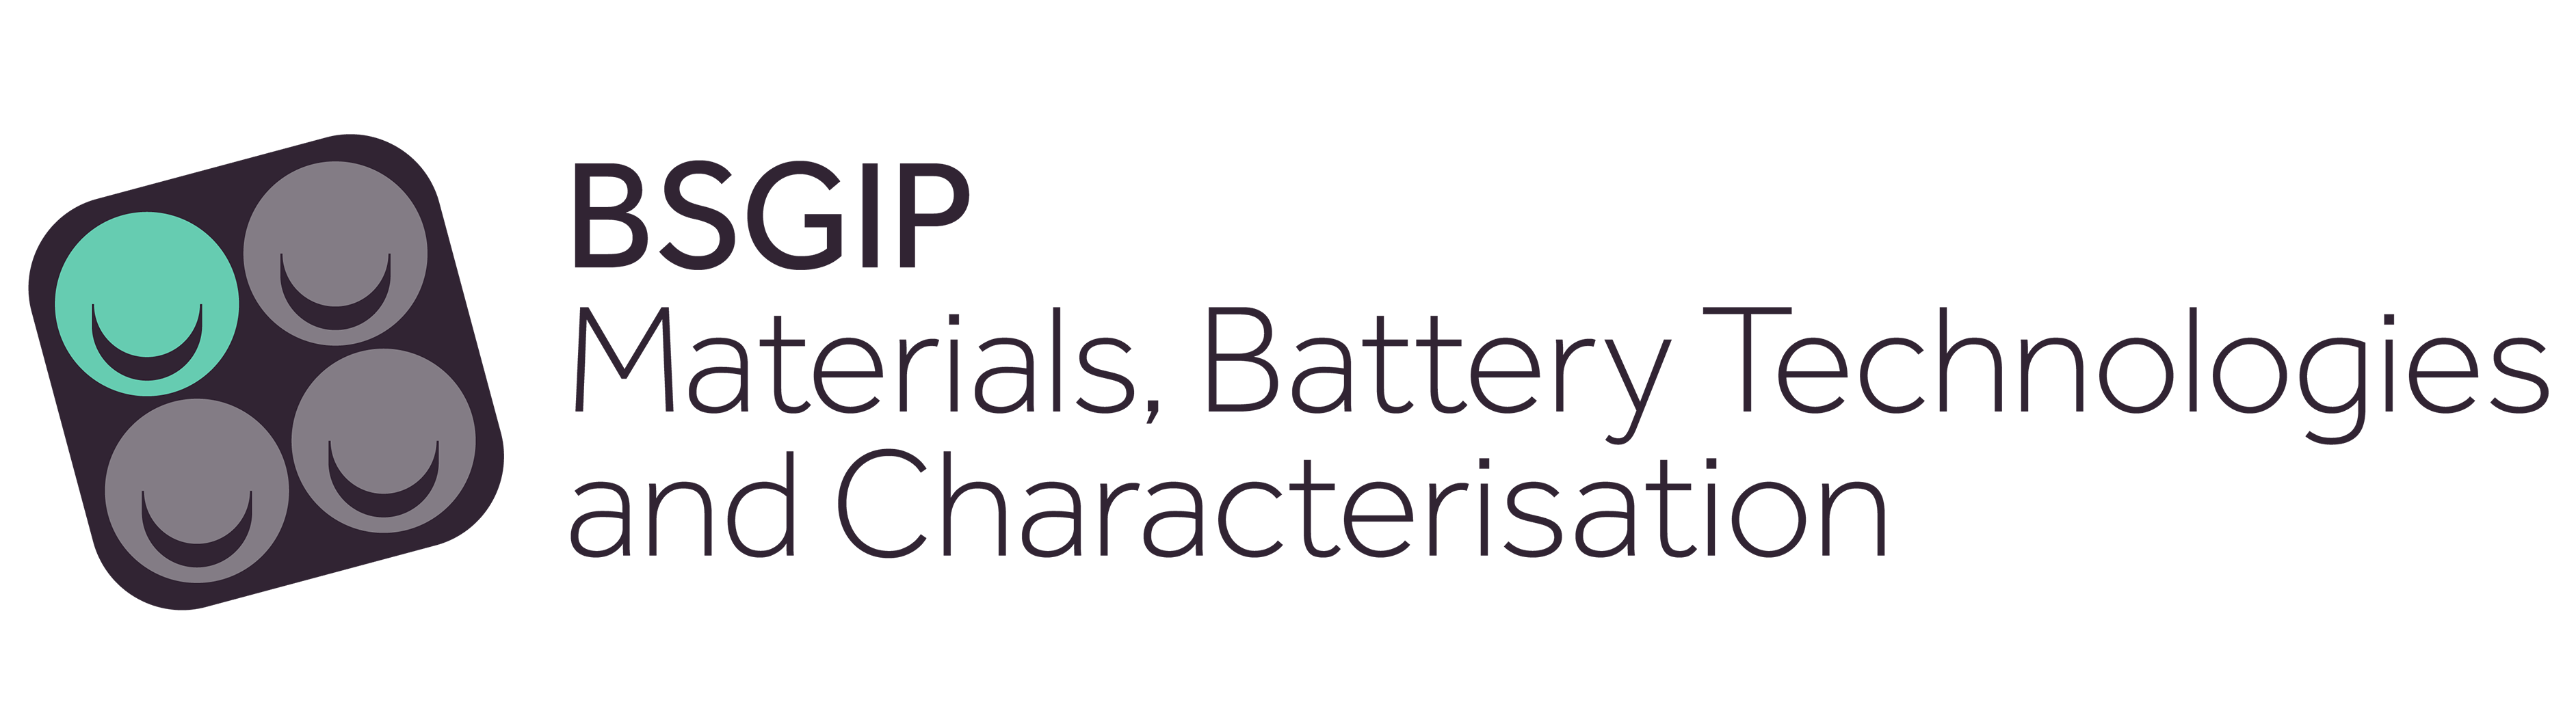 Battery Storage and Grid Integration Program Materials Logo